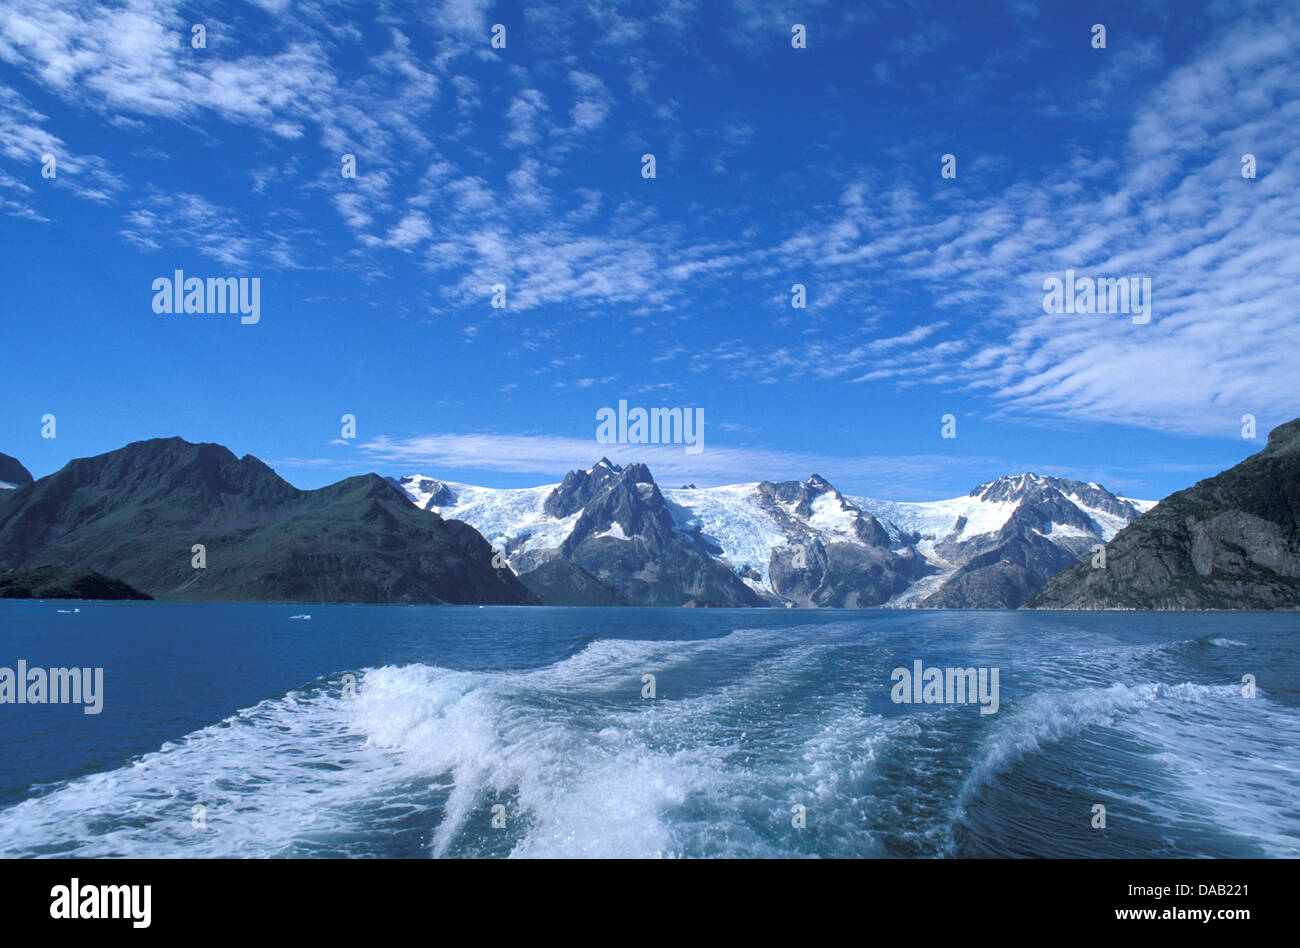 Nordwestlichen Fjord, Kenai Fjords, Alaska, USA, Meer, Boot Gefolge, Berge, Berge, Wasser, blauer Himmel, sonnig, wake, Boot Stockfoto